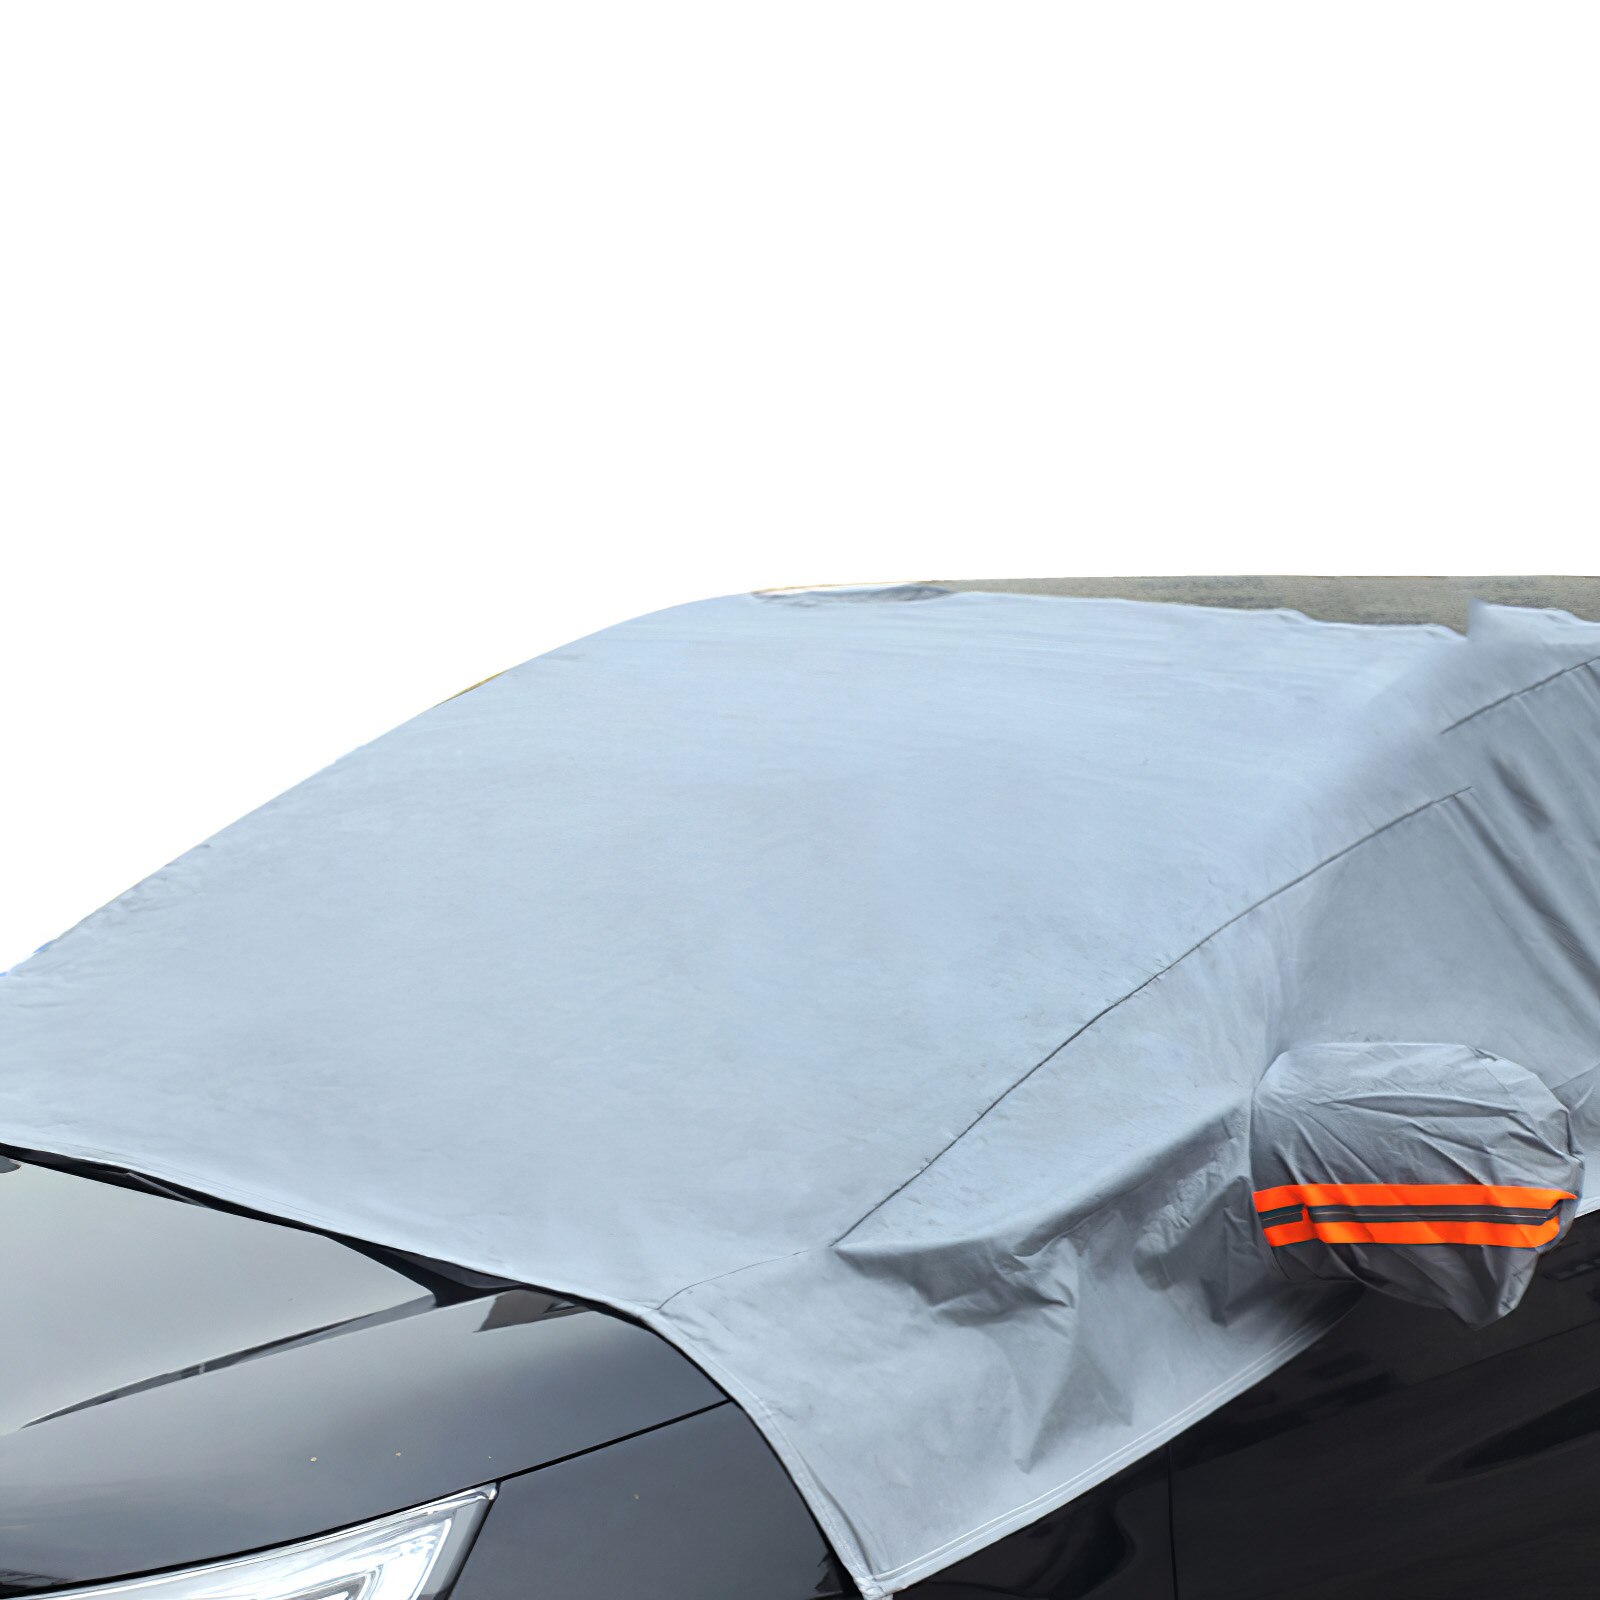 Auto Voorruit Auto Cover Sneeuw Voorruit Window Cover Zonlicht Zonnescherm Auto Zon Protector Auto Accessoire